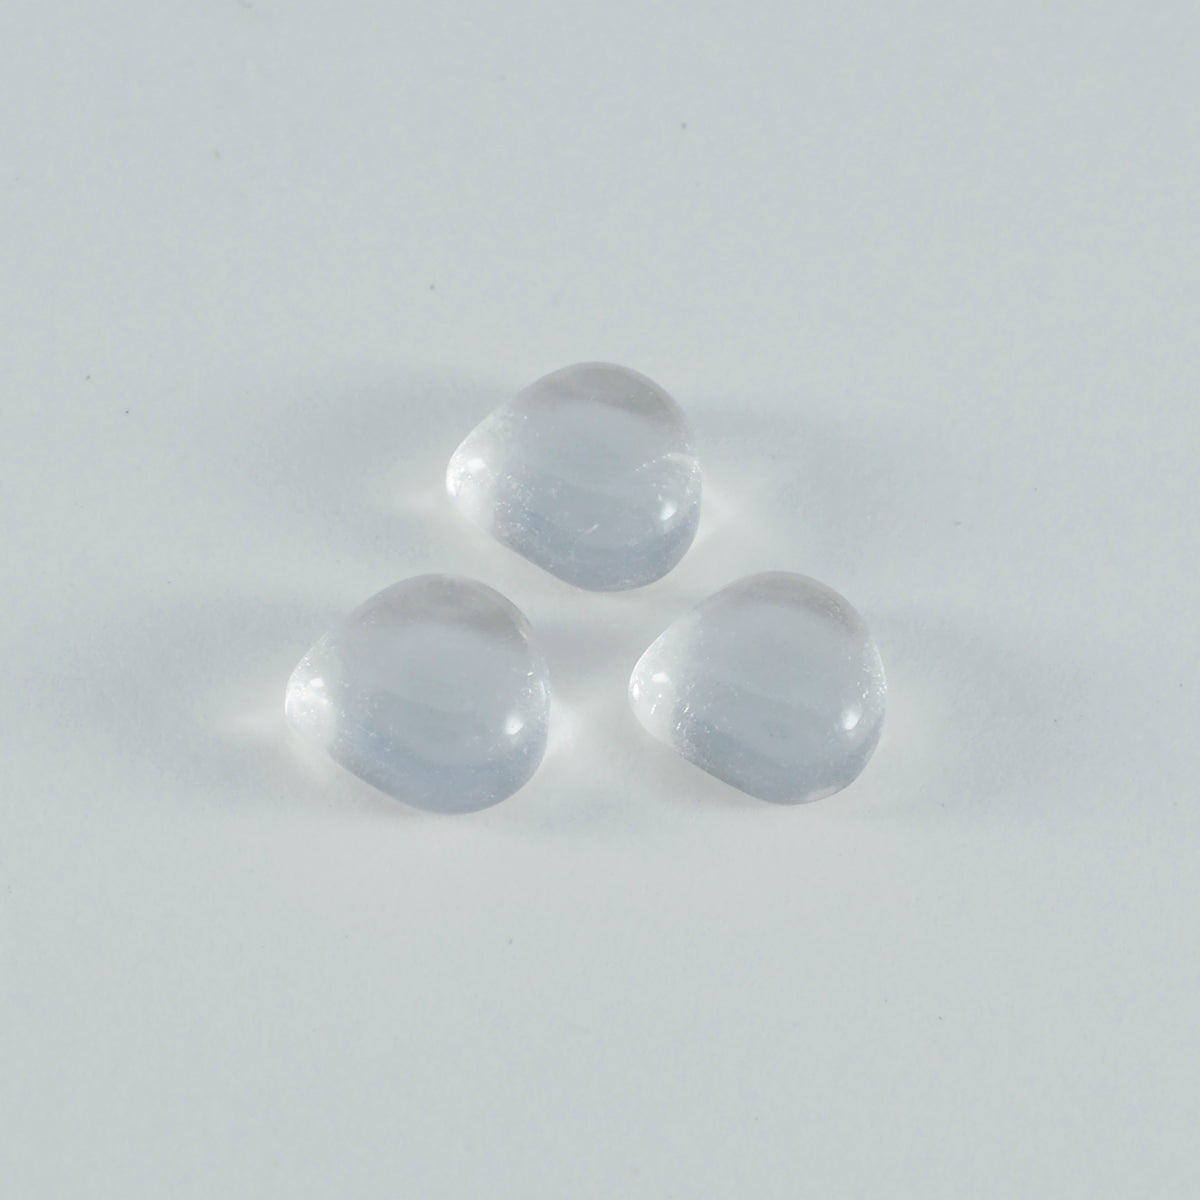 Riyogems 1PC White Crystal Quartz Cabochon 12x12 mm Heart Shape AAA Quality Gems